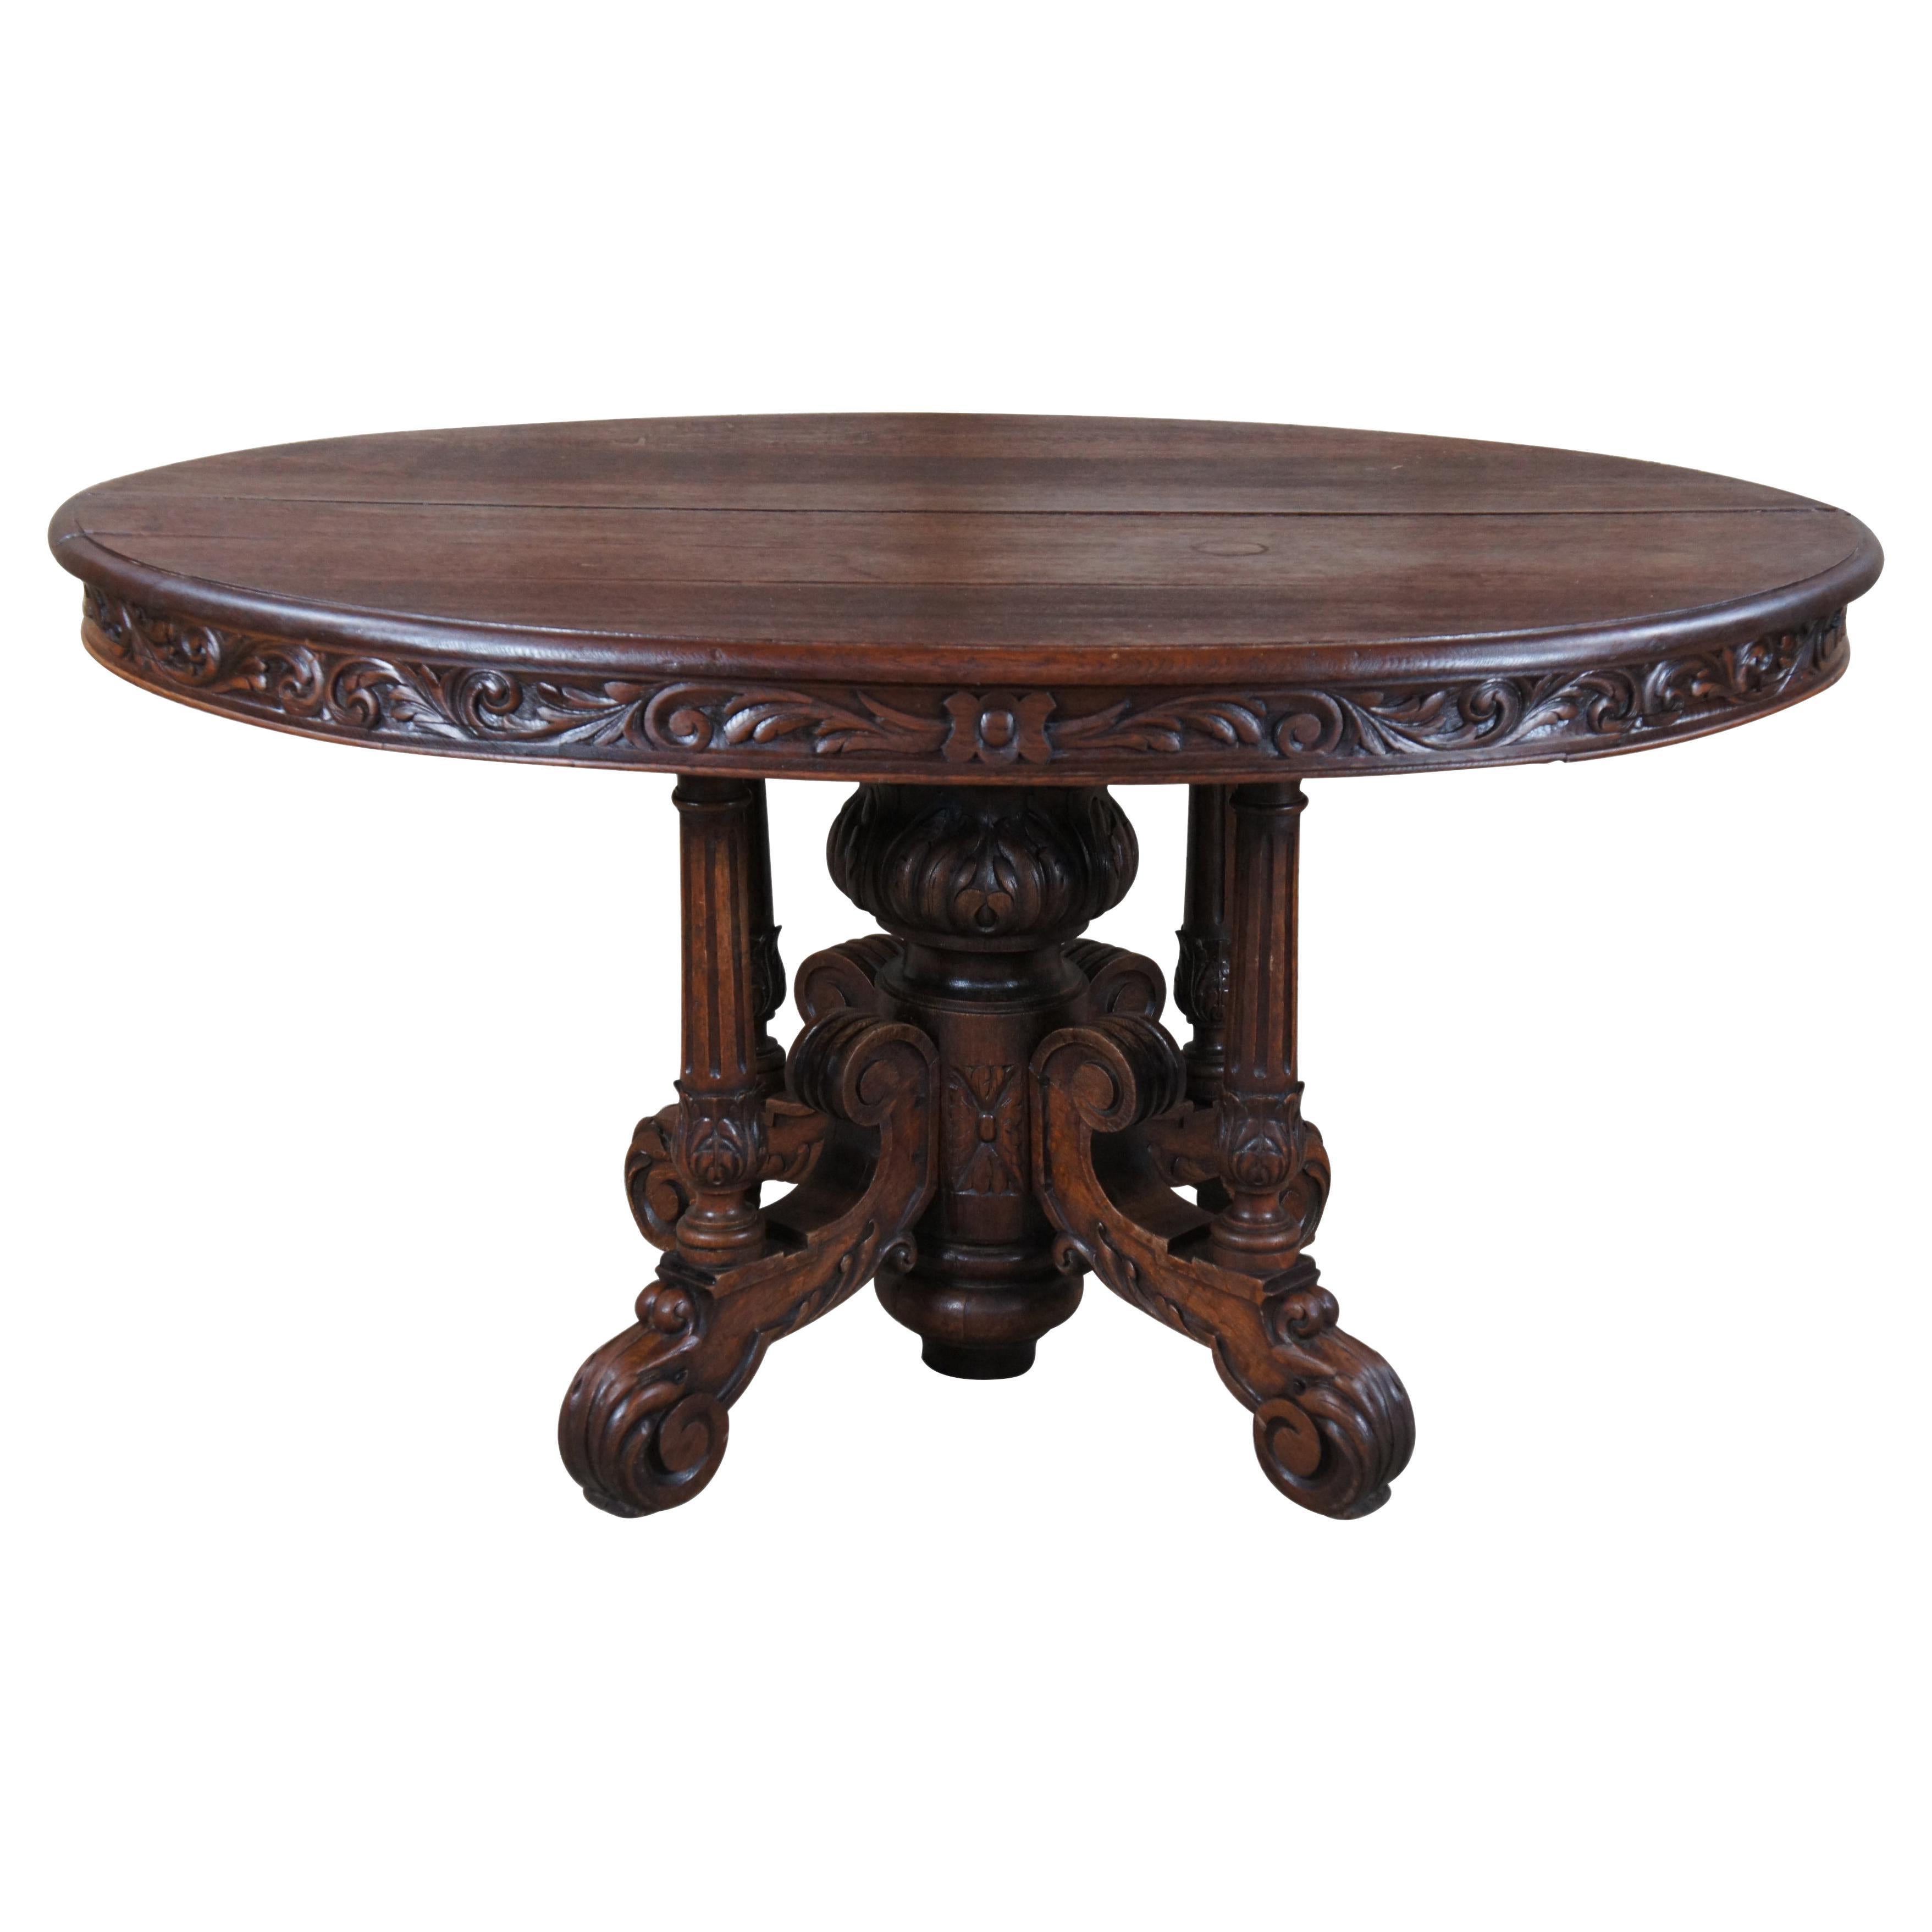 Antique French Renaissance Revival Oval Oak Carved Dining Center or Hunt Table For Sale